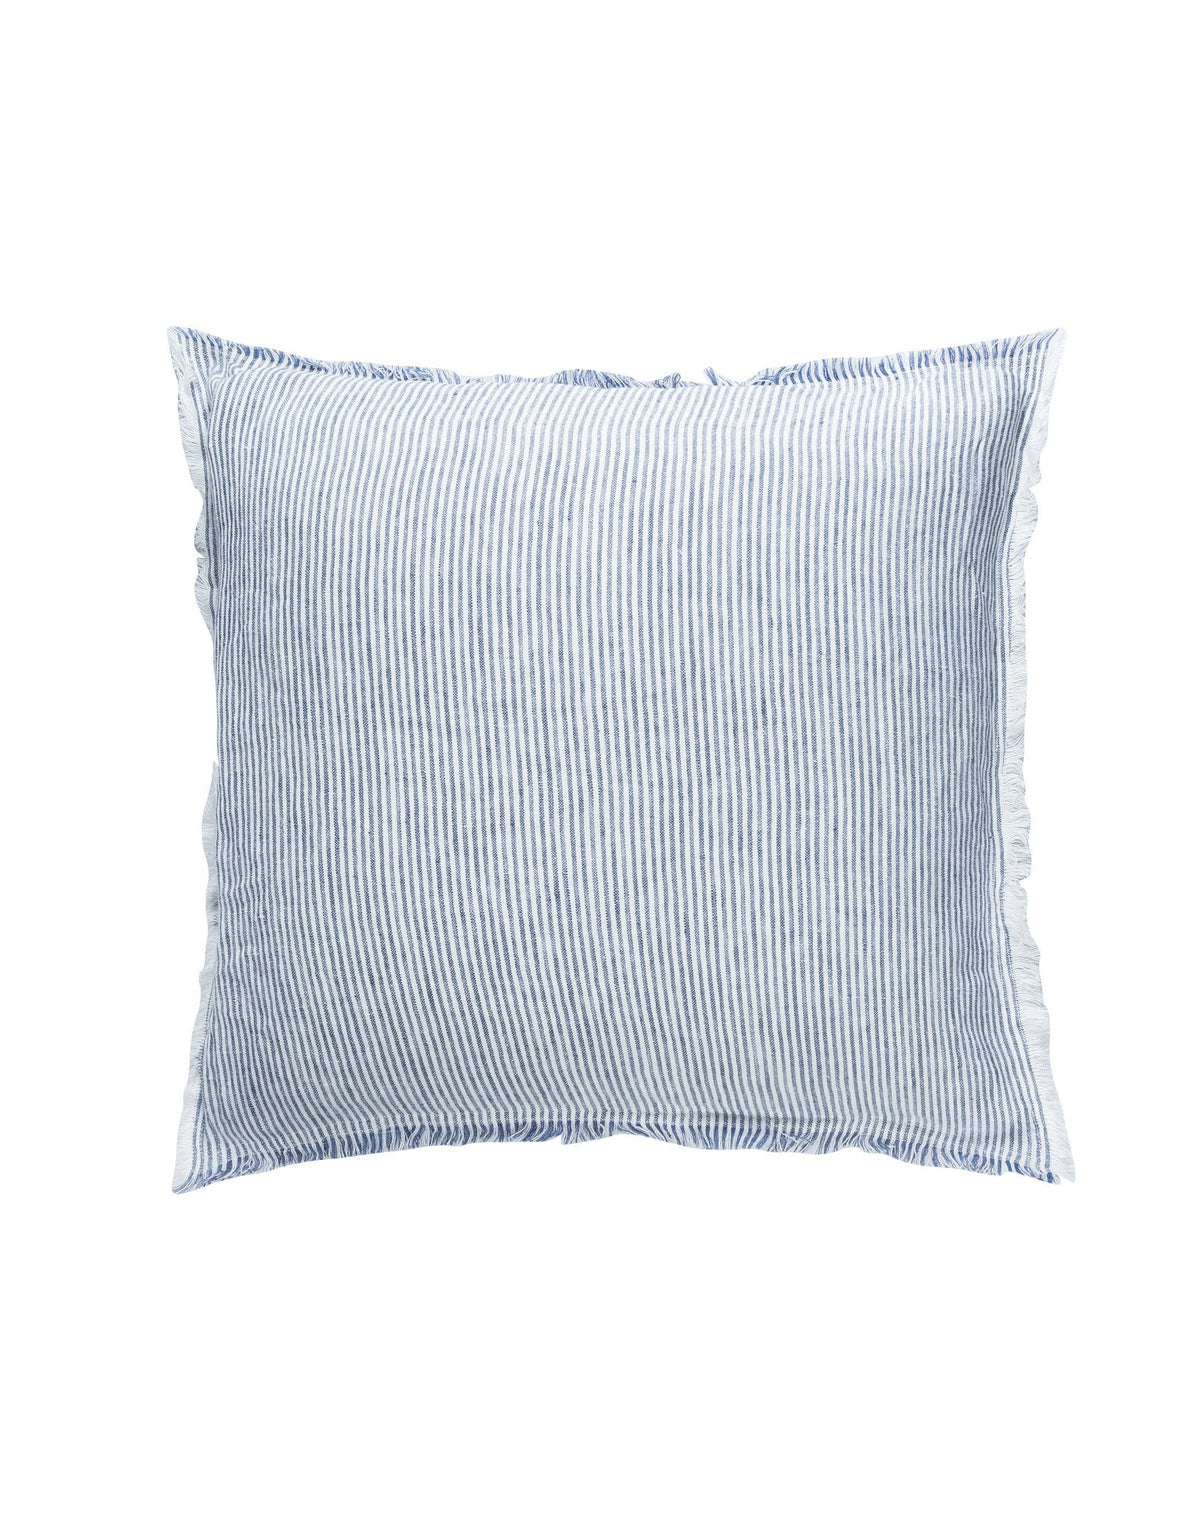 Chambray Blue &amp; White Striped So Soft Linen Pillow